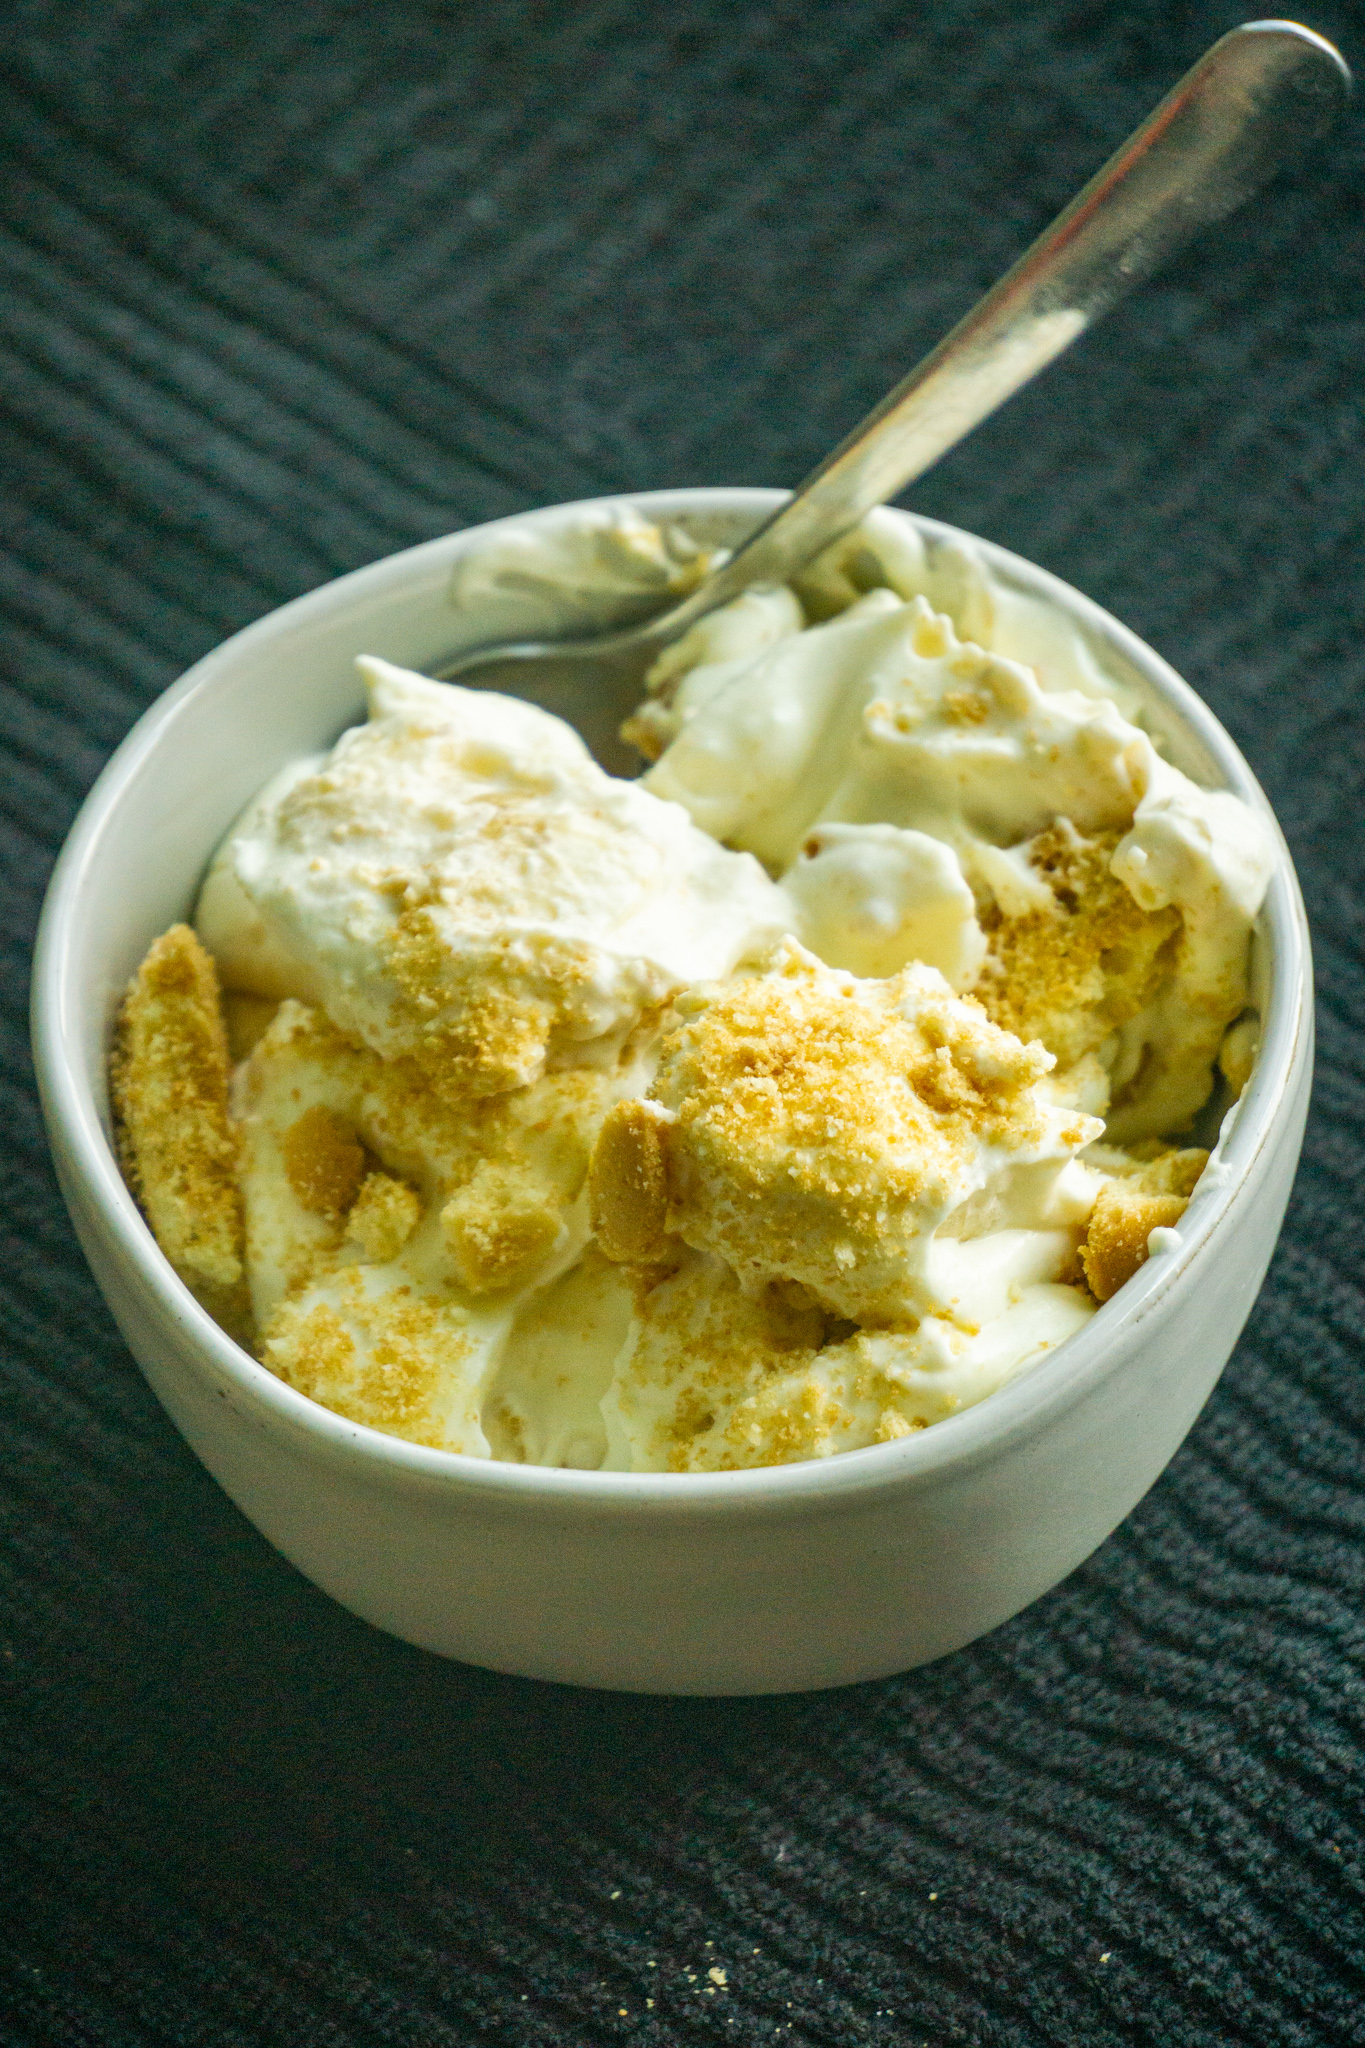 rich, creamy banana pudding in a white dessert bowl.